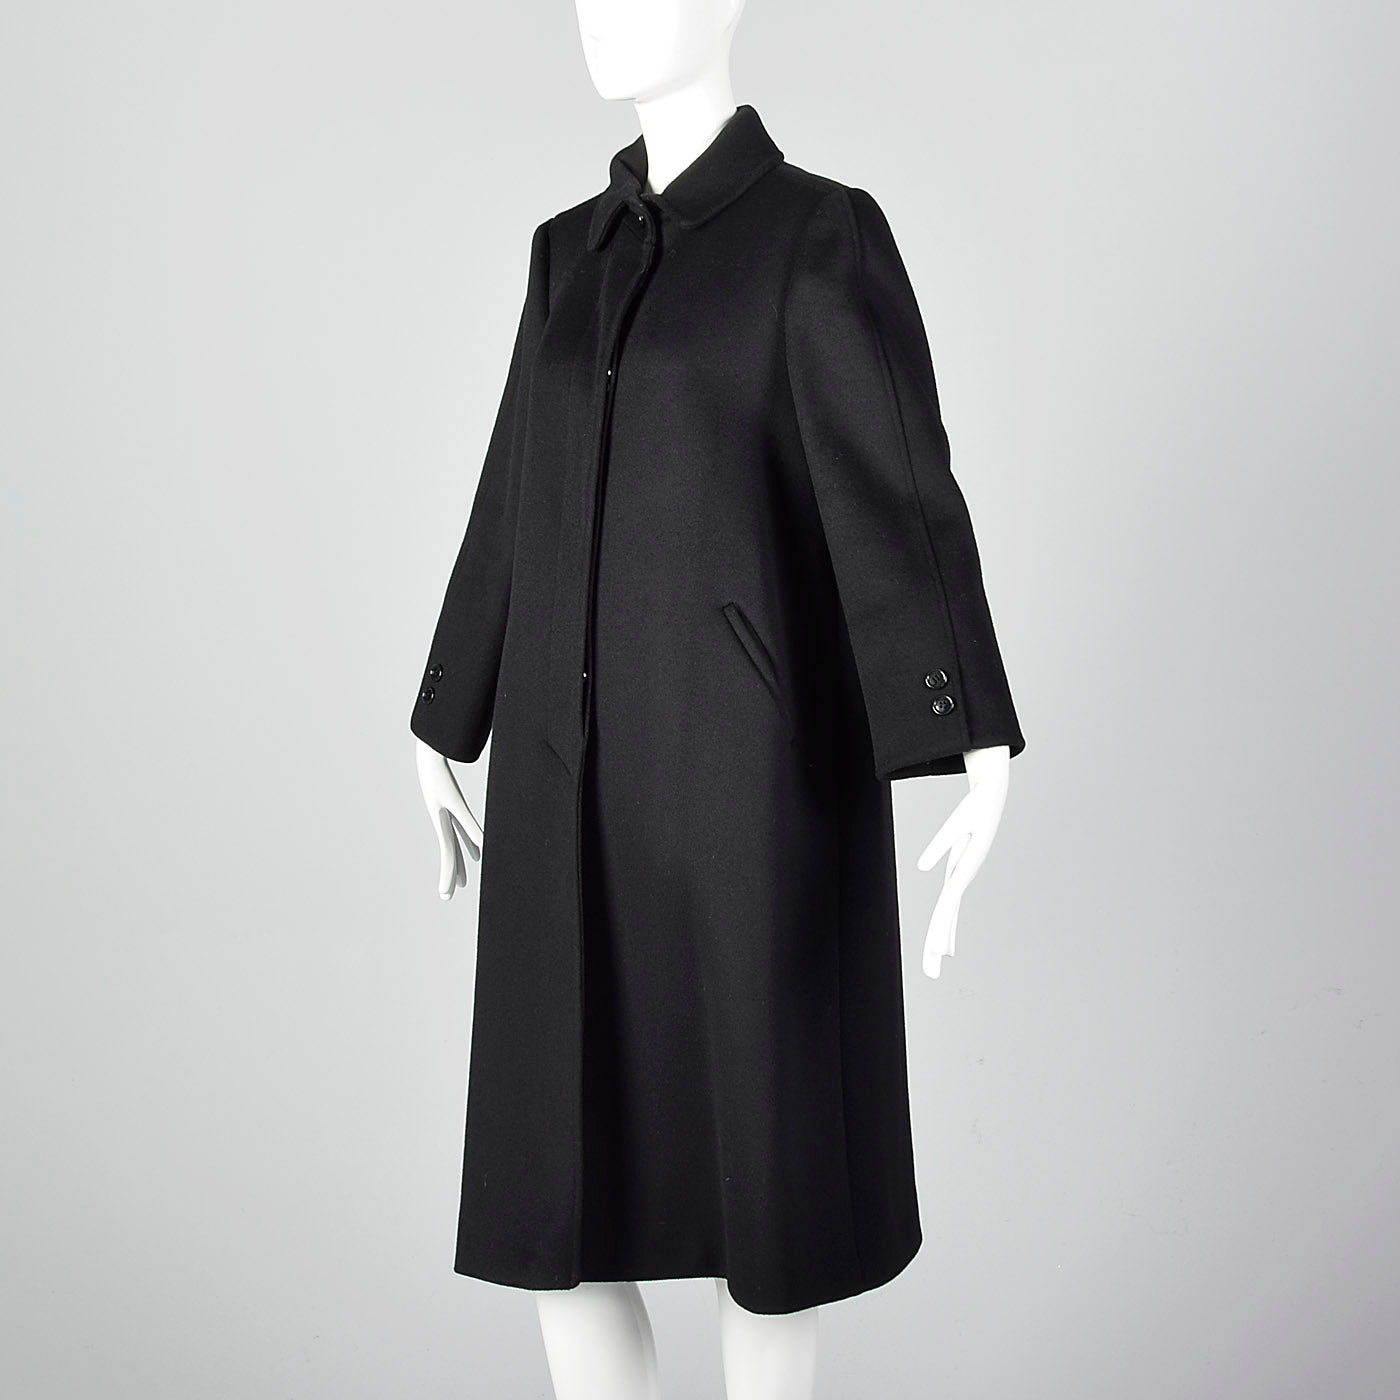 1980s Black Wool Winter Coat